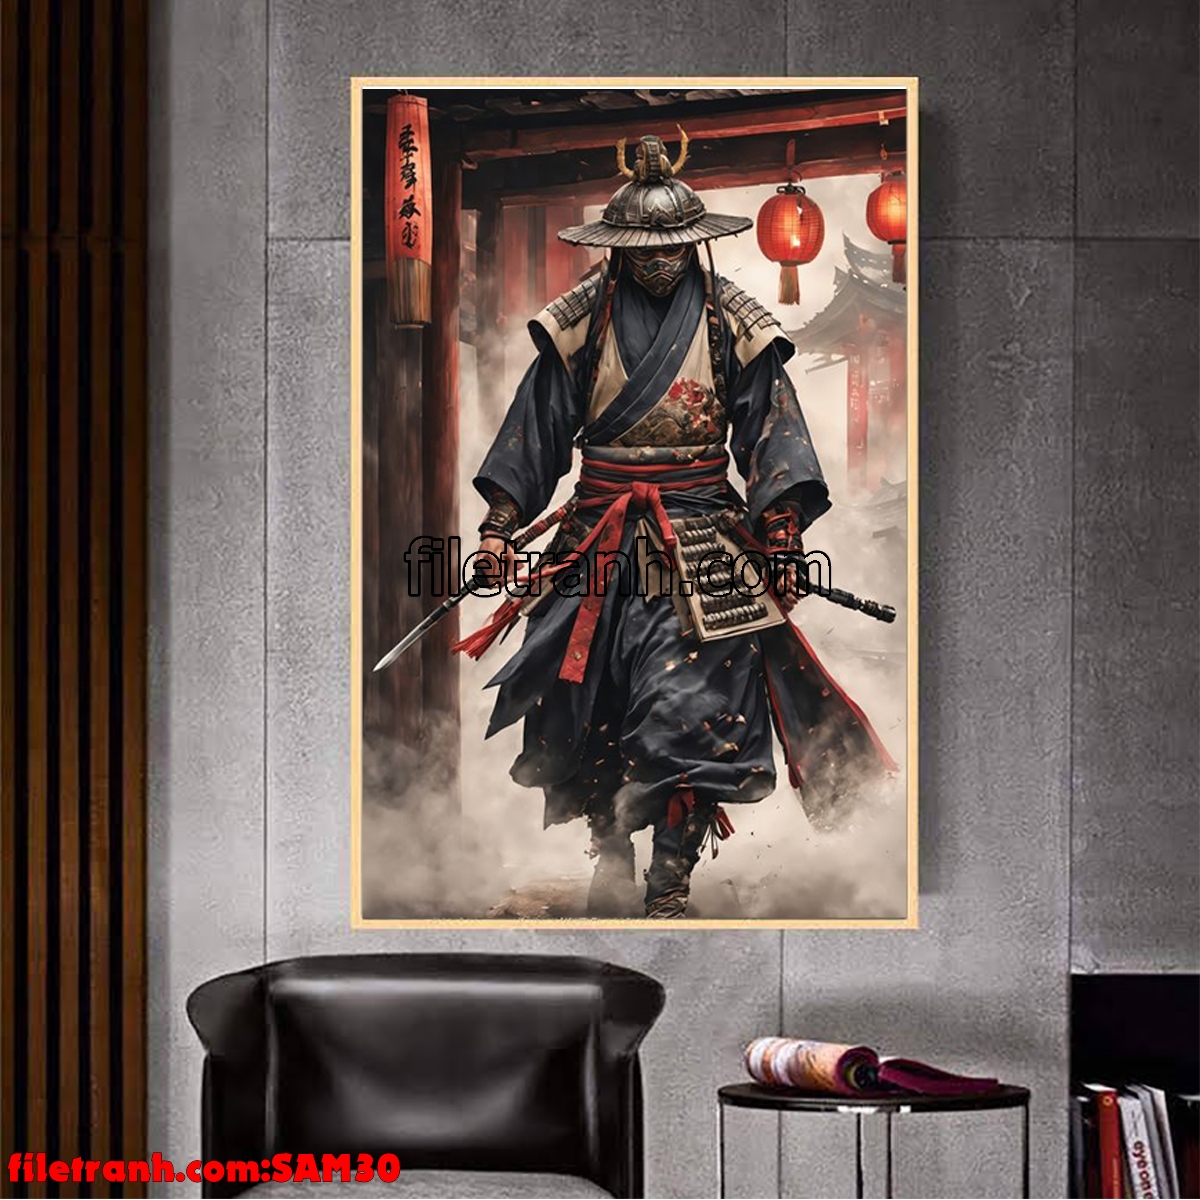 https://filetranh.com/tuong-nen/file-tranh-samurai-vo-si-nhat-ban-sam30.html